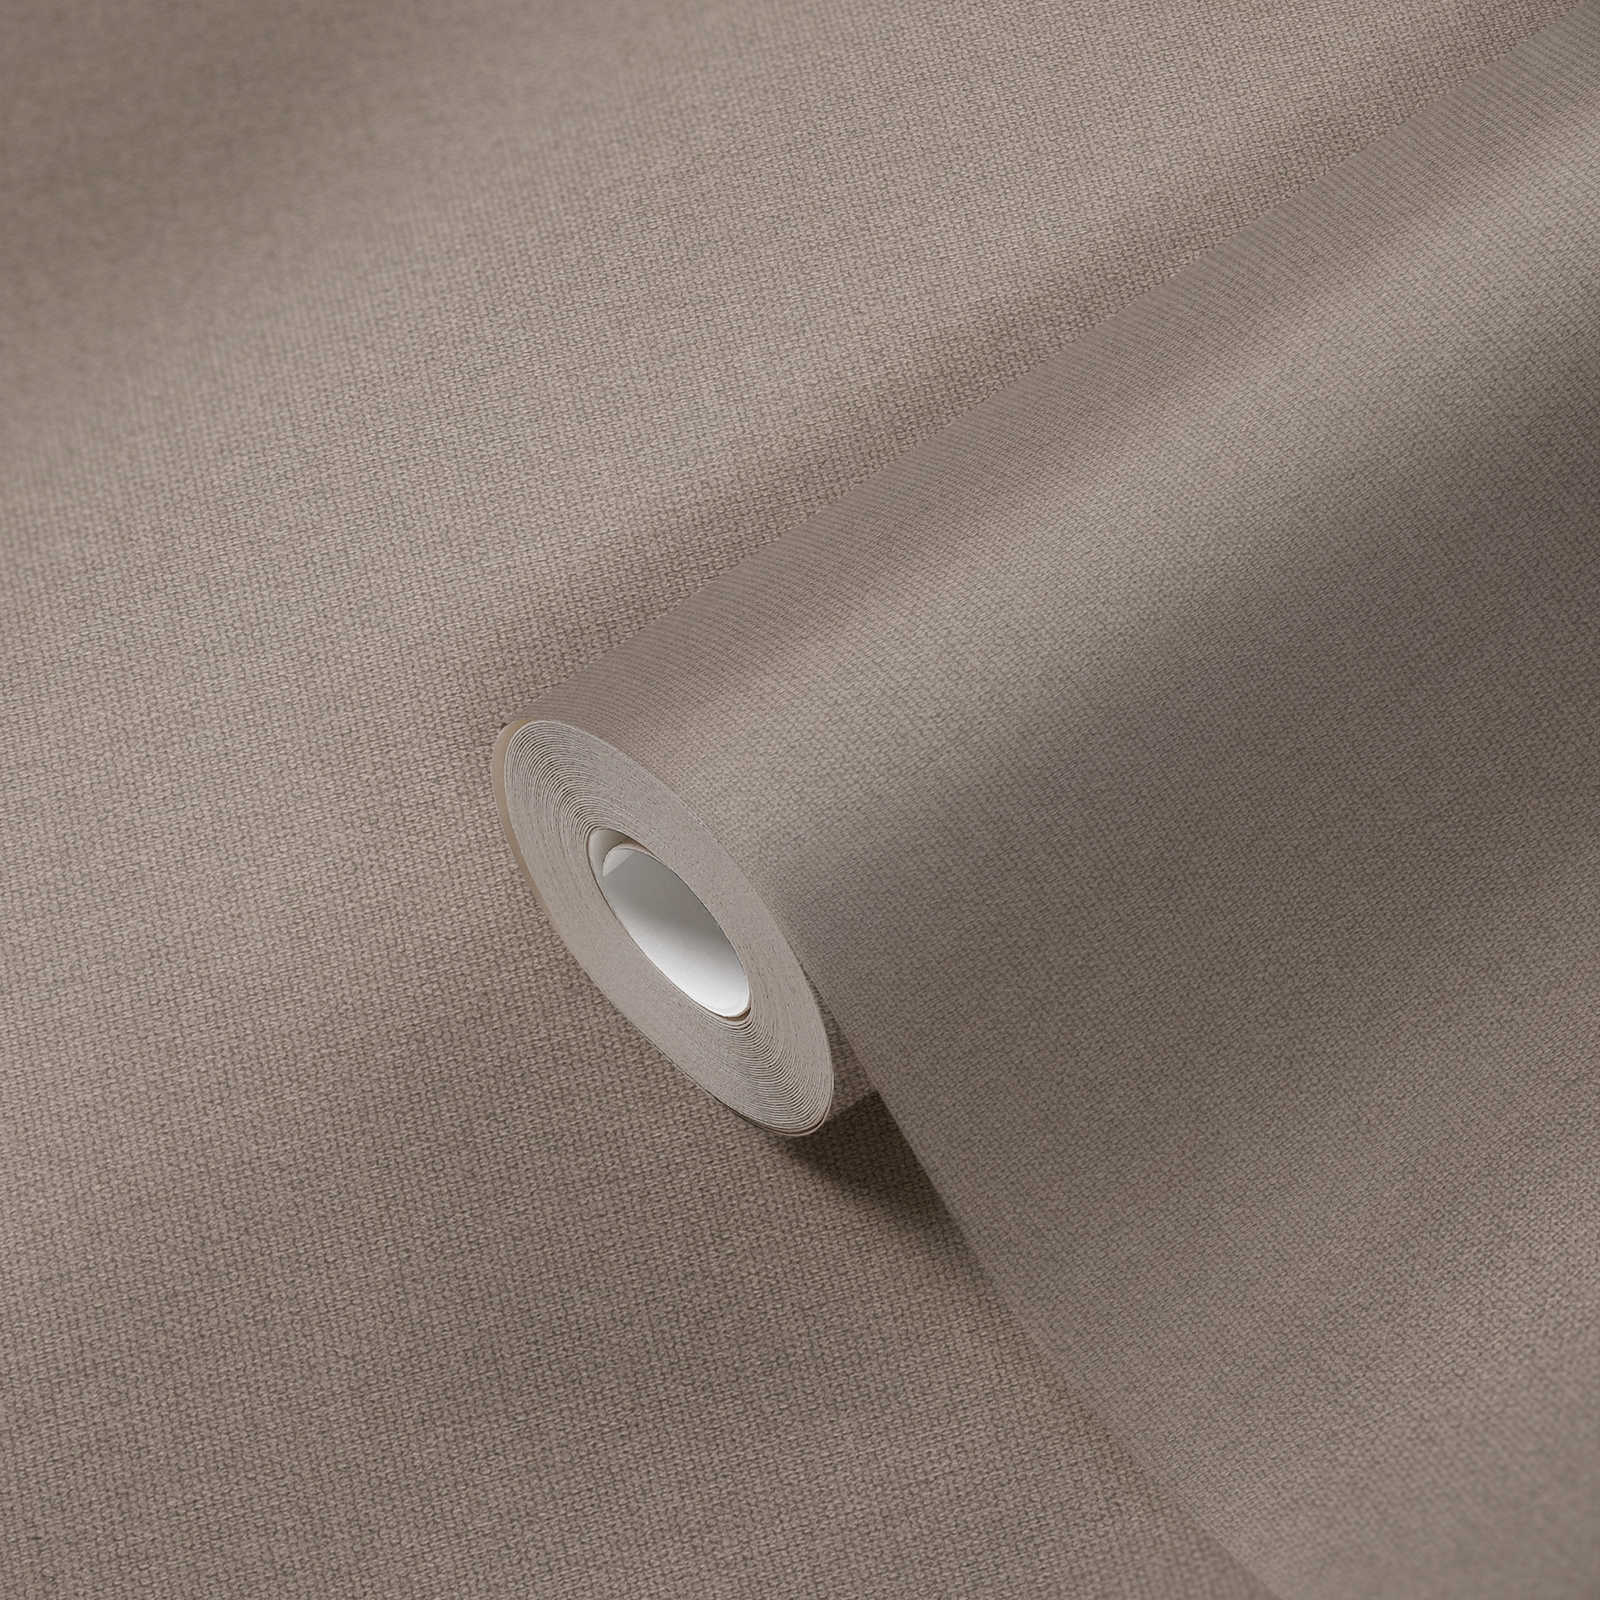             papel pintado de aspecto de lino con detalles de estructura, liso - gris, beige
        